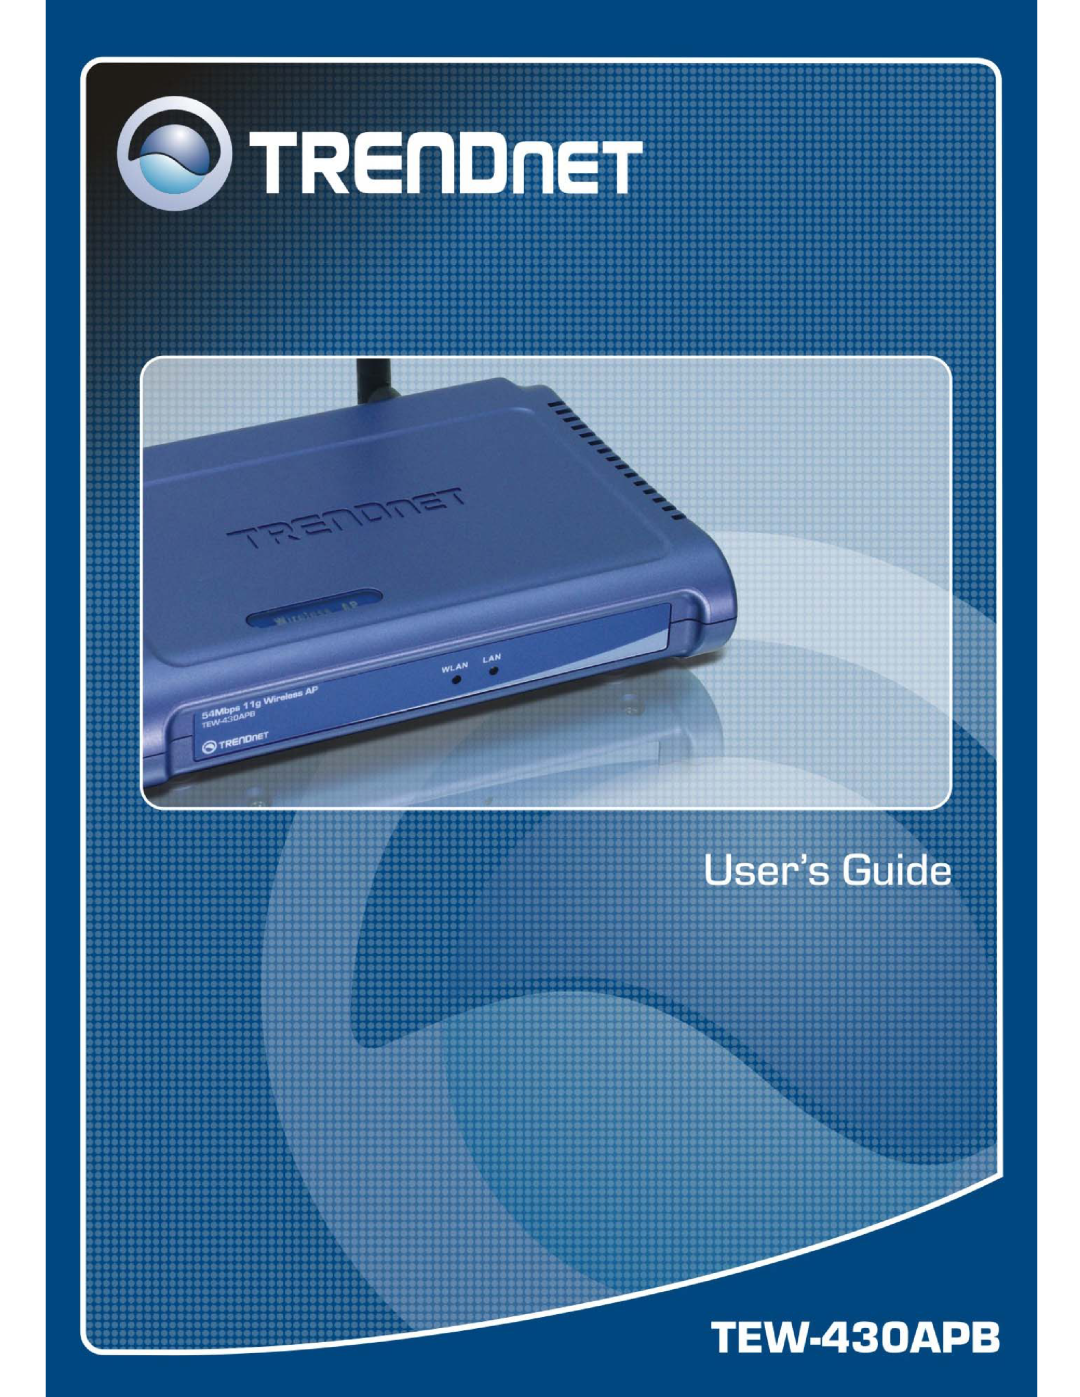 TRENDnet TEW-430APB manual Quick Installation Guide 